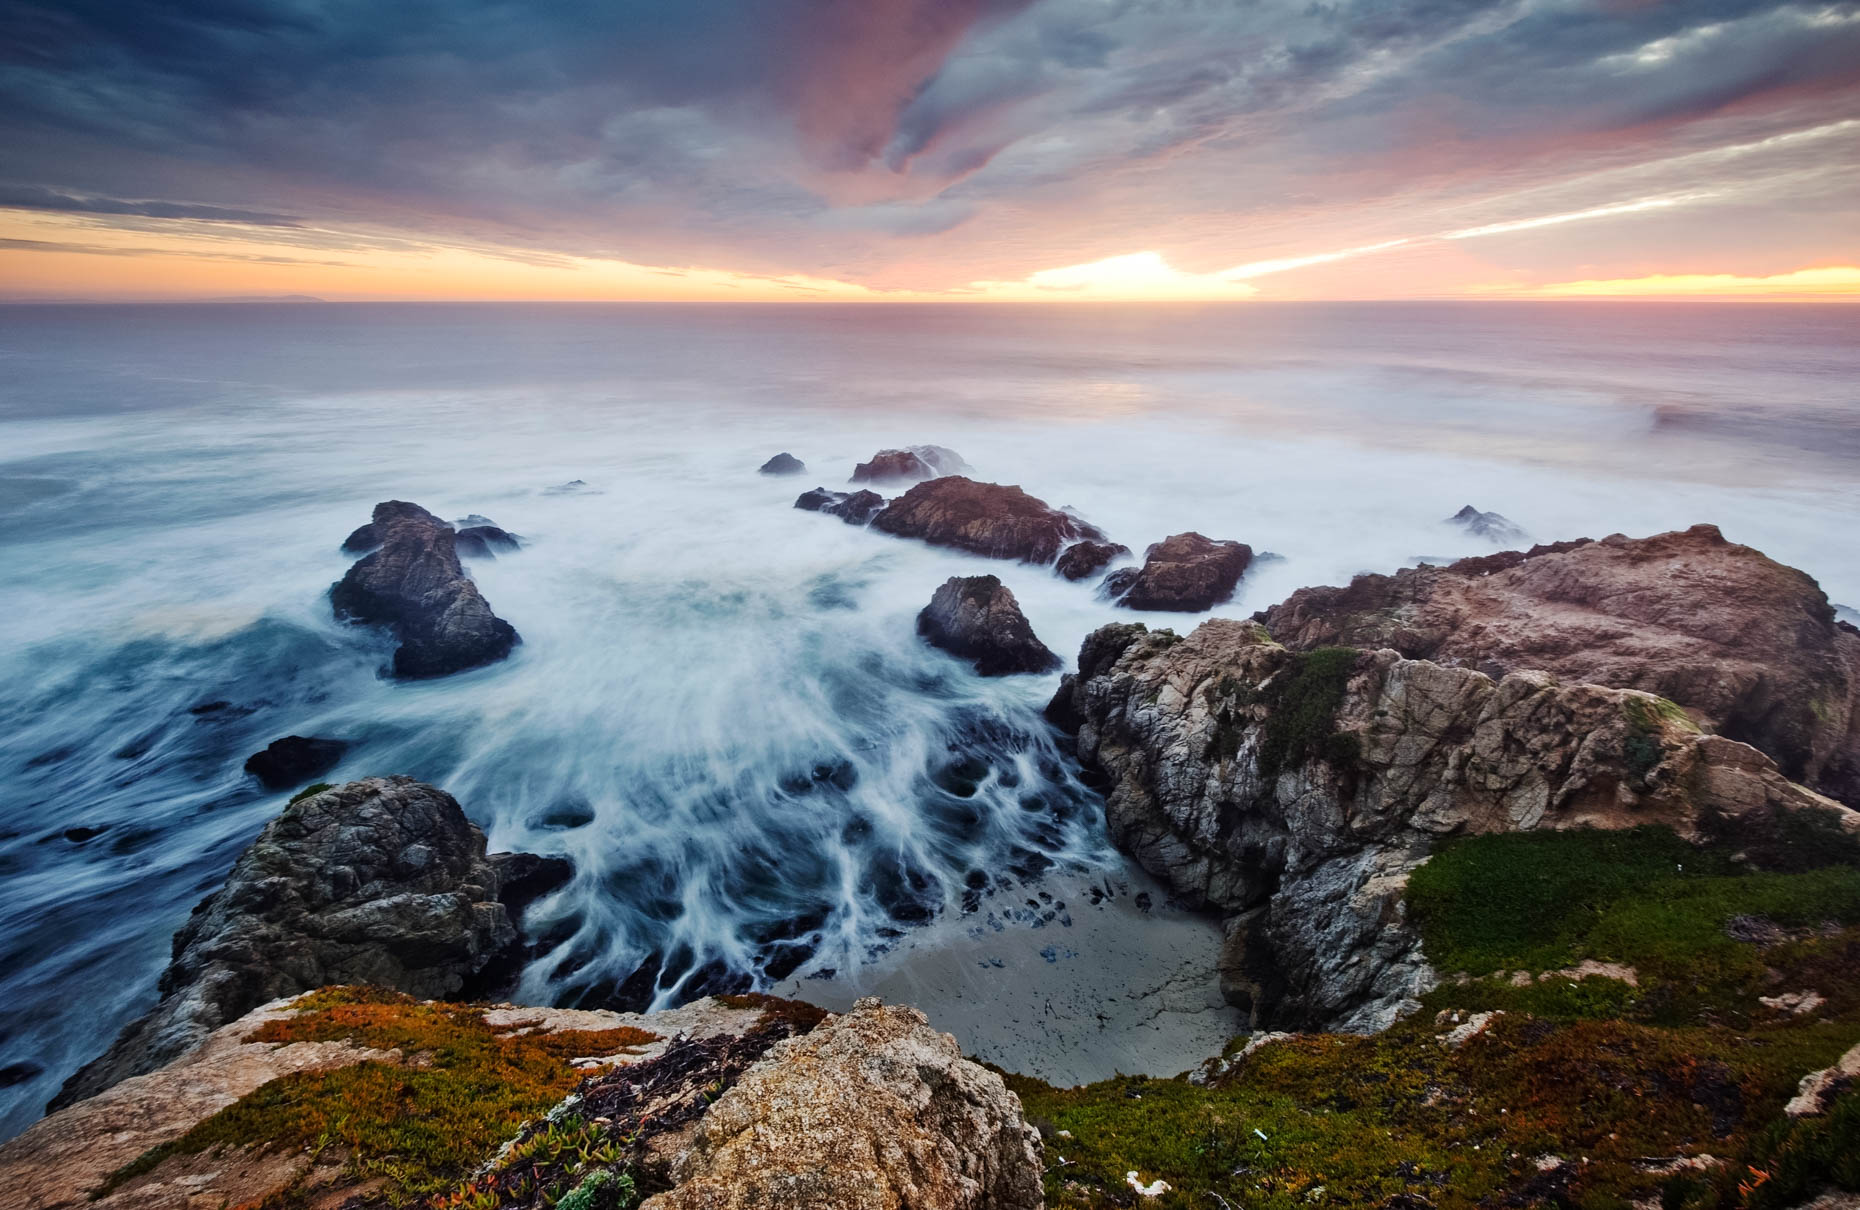 Bodega Head Sunset - Bodega Bay, California